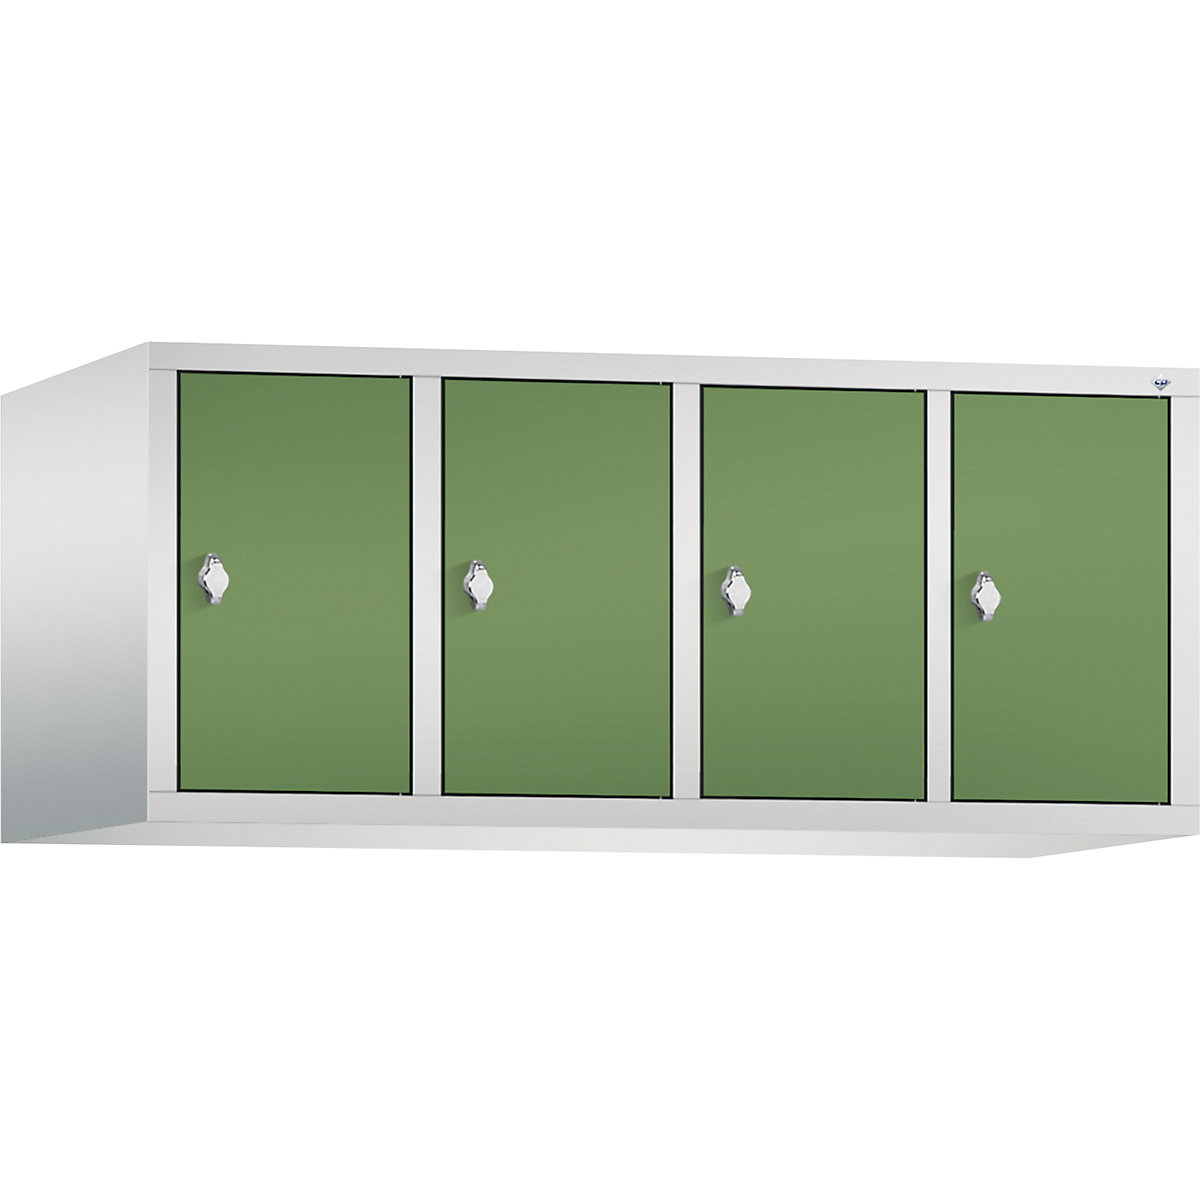 C+P – Altillo CLASSIC, 4 compartimentos, anchura de compartimento 300 mm, gris luminoso / verde reseda